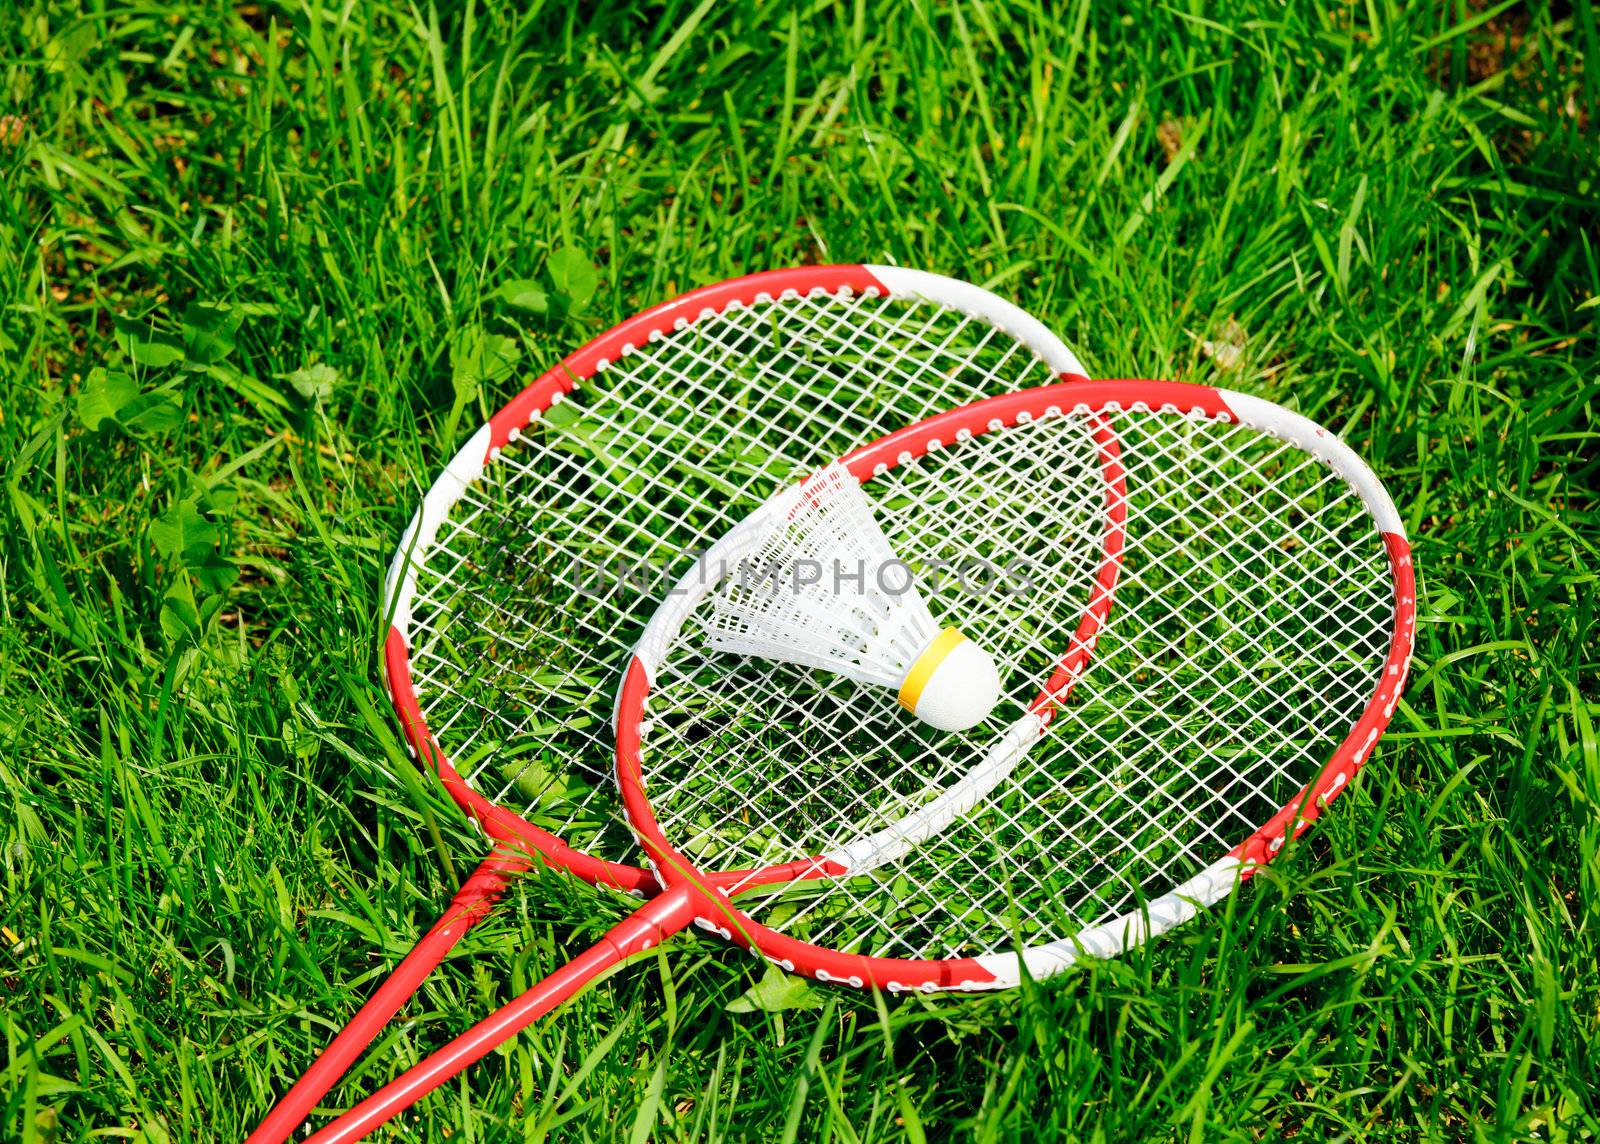 Badminton by naumoid